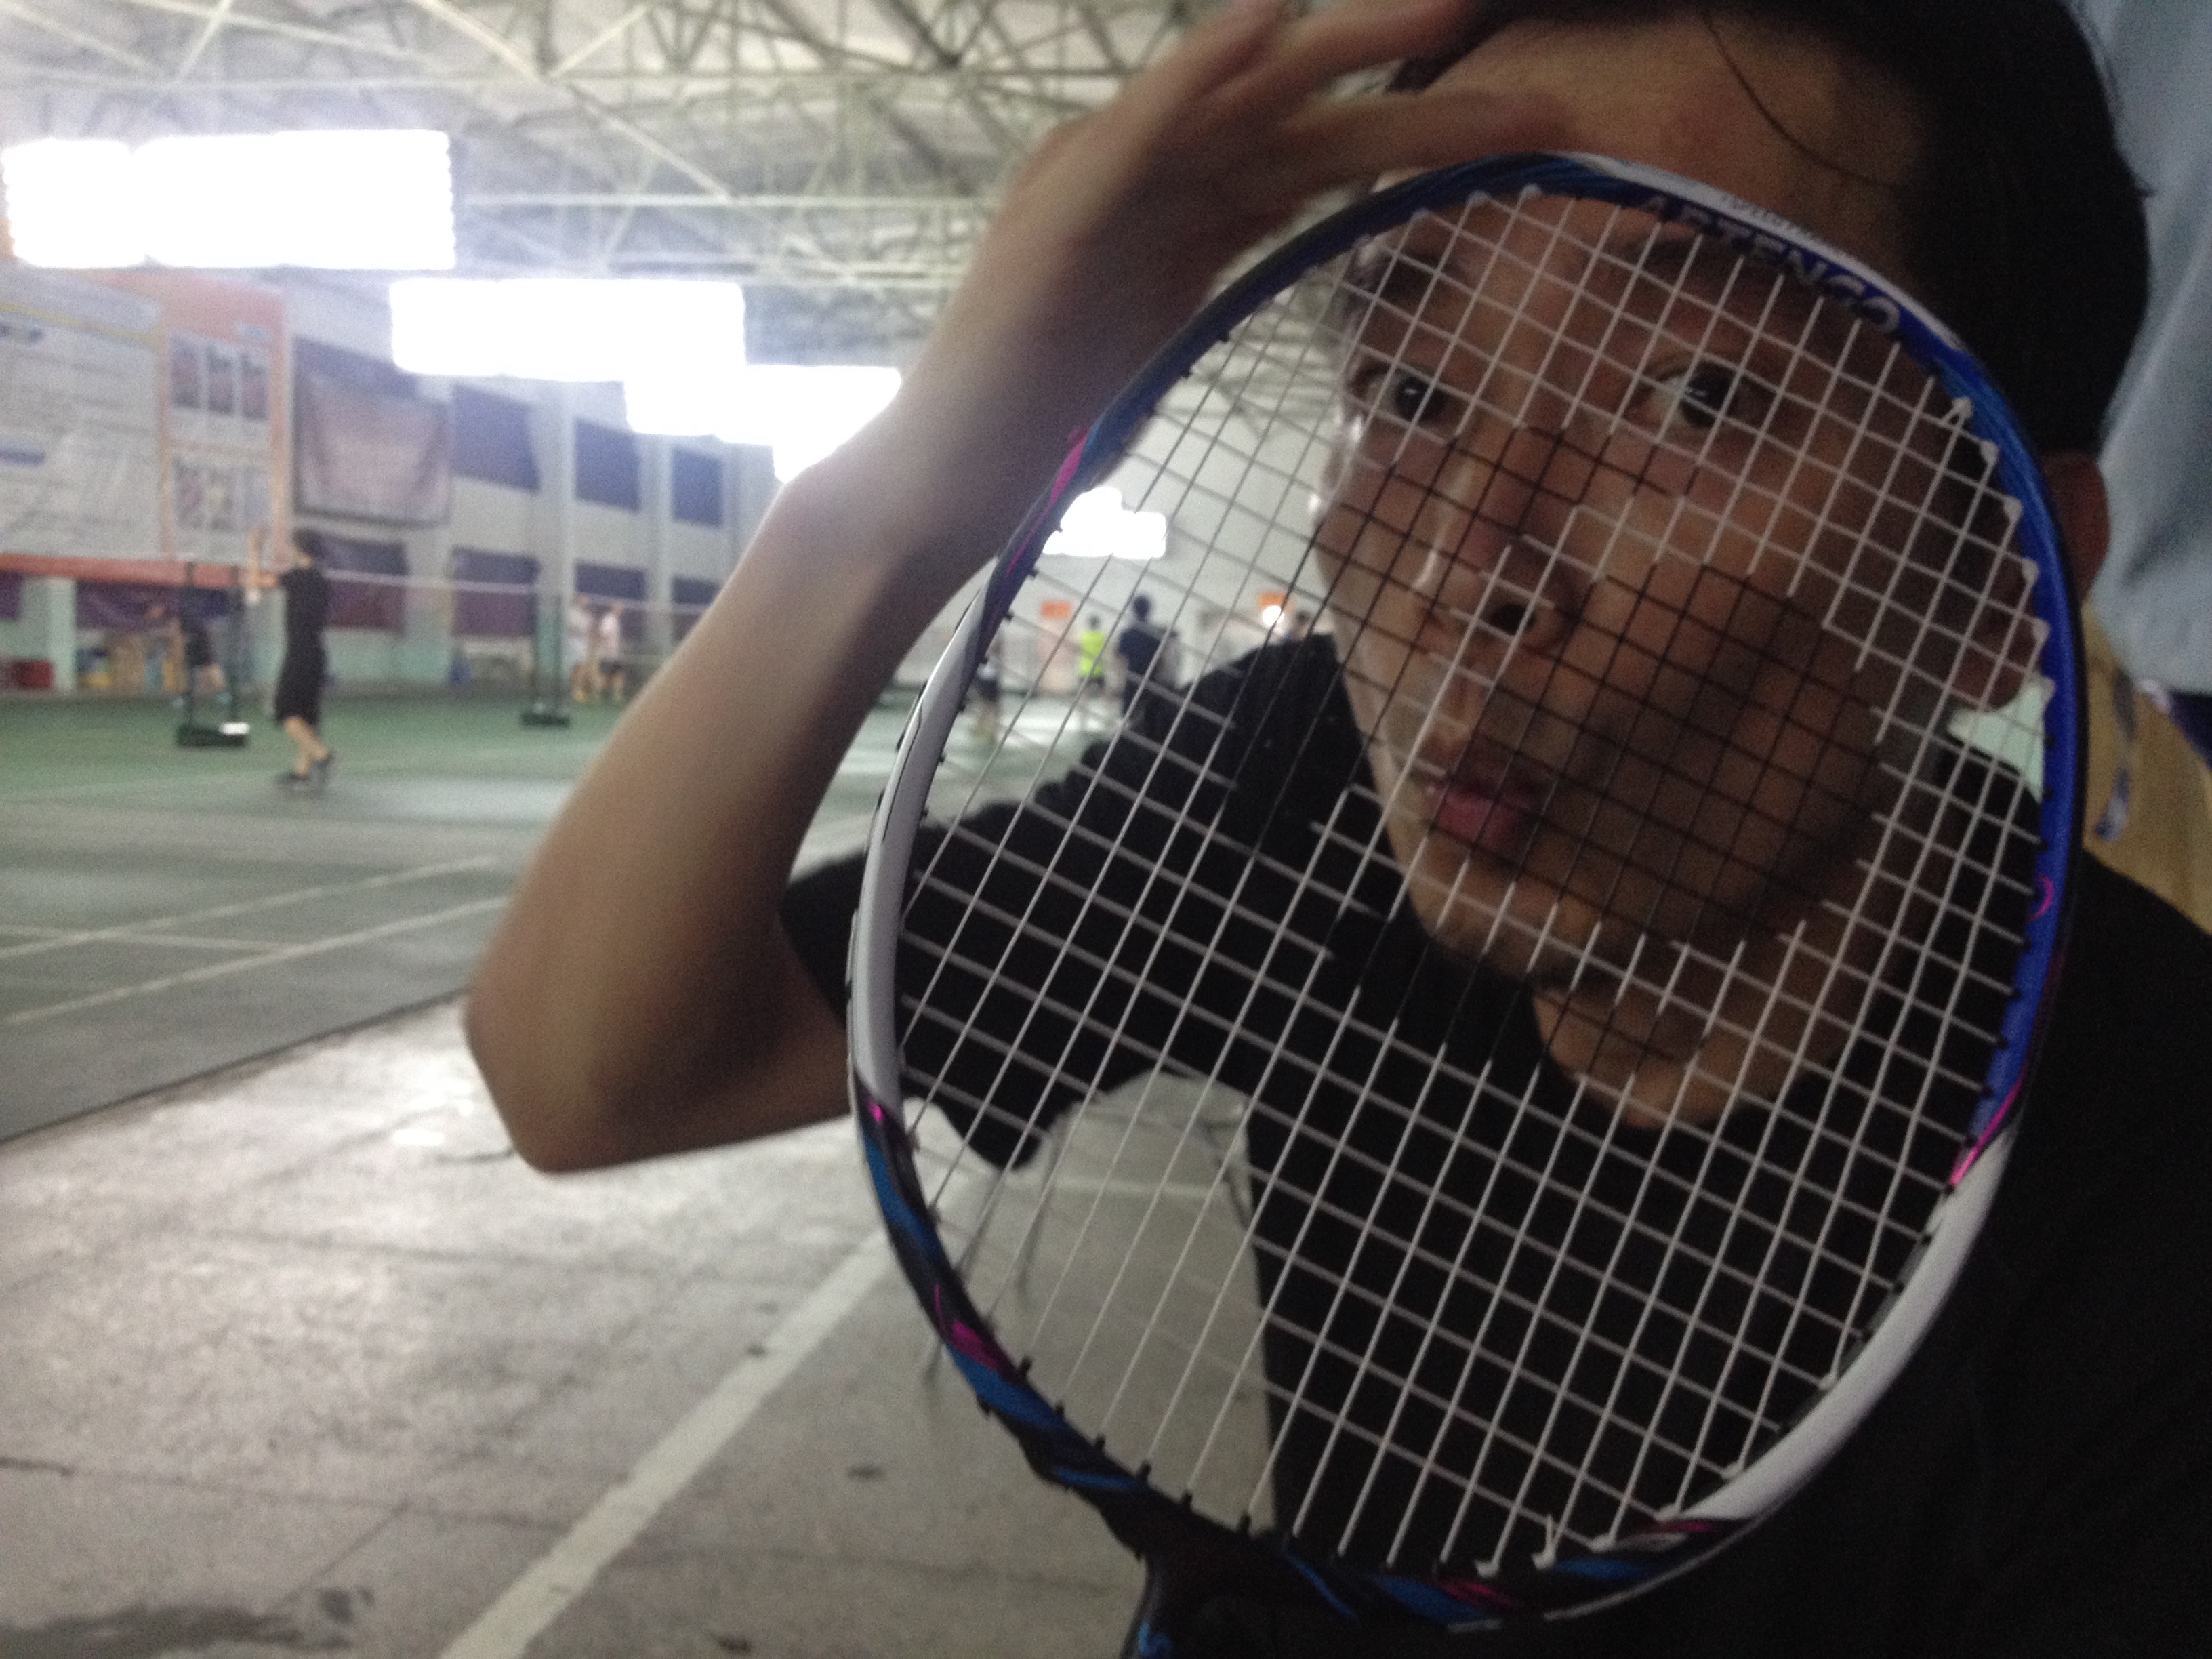 Badminton in China